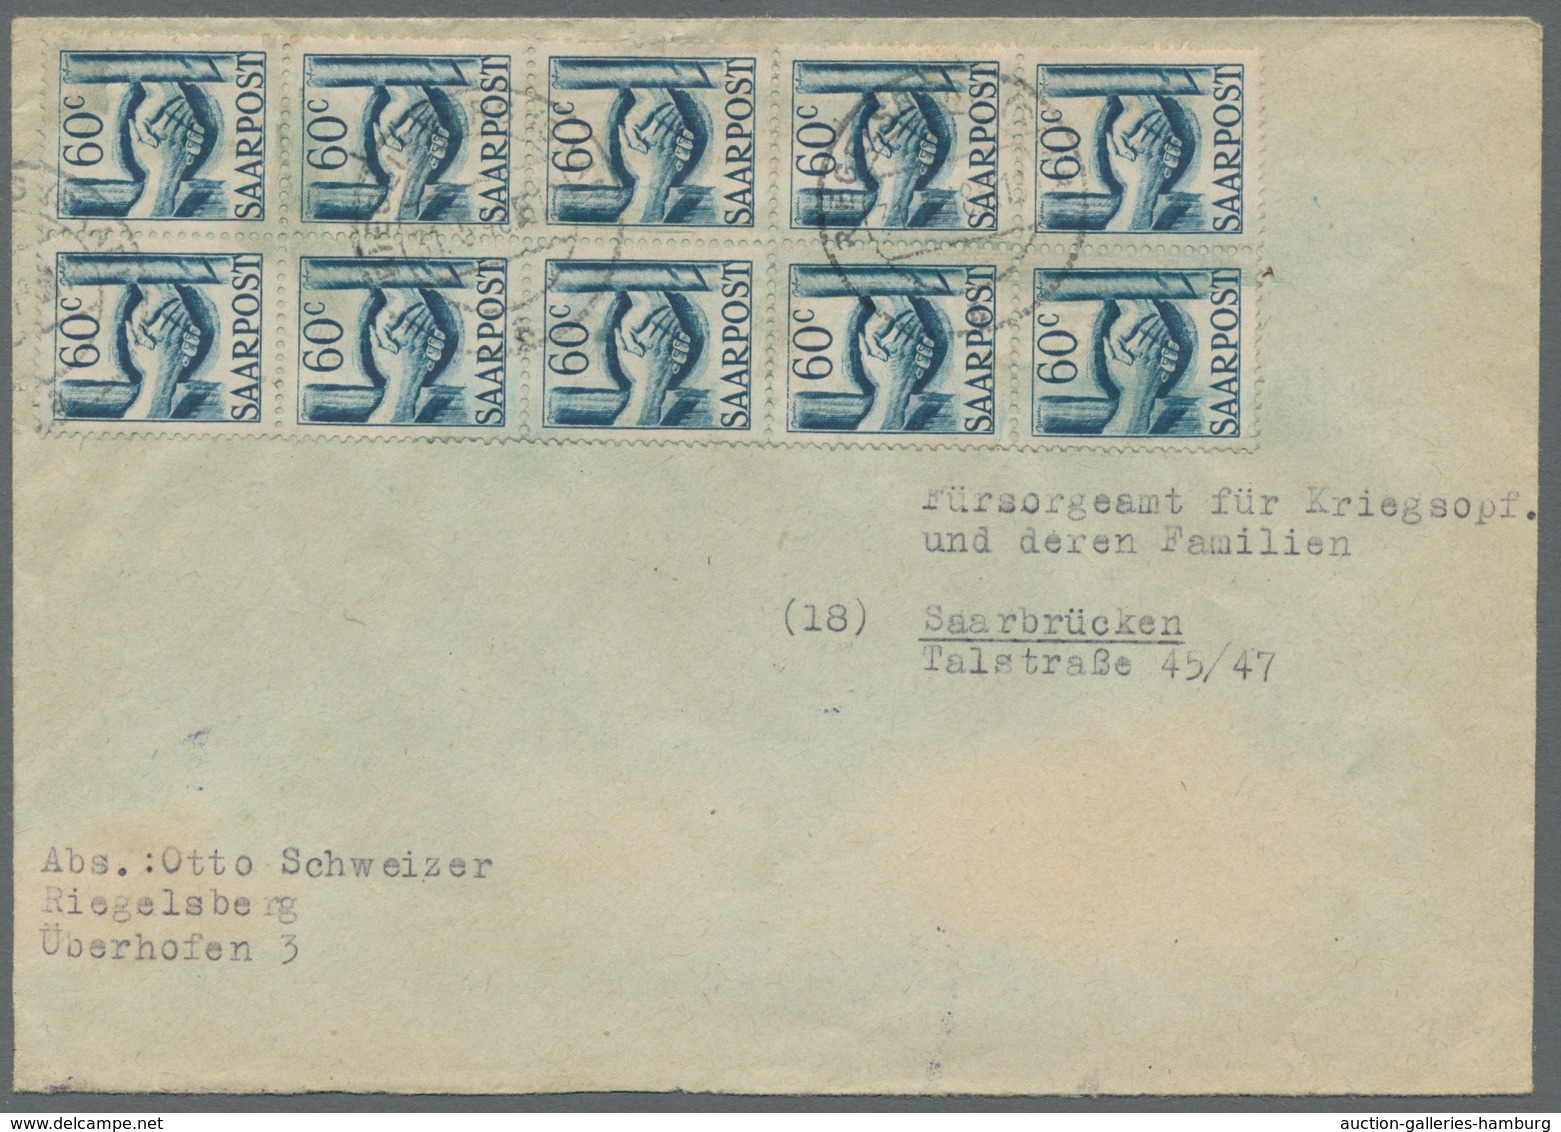 Saarland (1947/56): 1948, "60 C. Saar III", Portorichtige EF Auf Zeitungs-Drucksache Und Zehnerblock - Unused Stamps